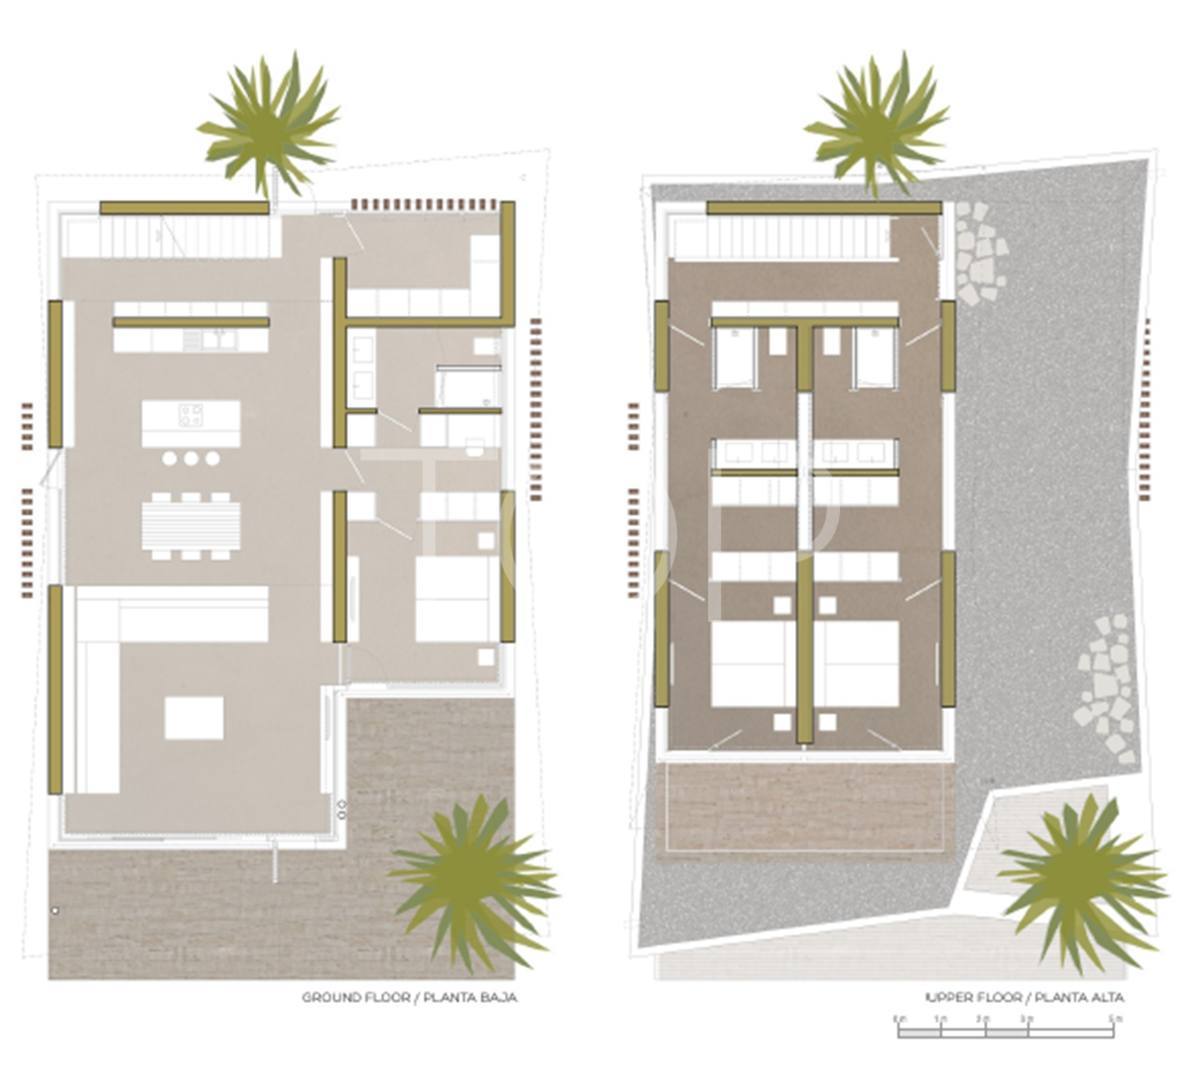 Moderne  Neubauvilla mit Meerblick in Golf Costa Adeje